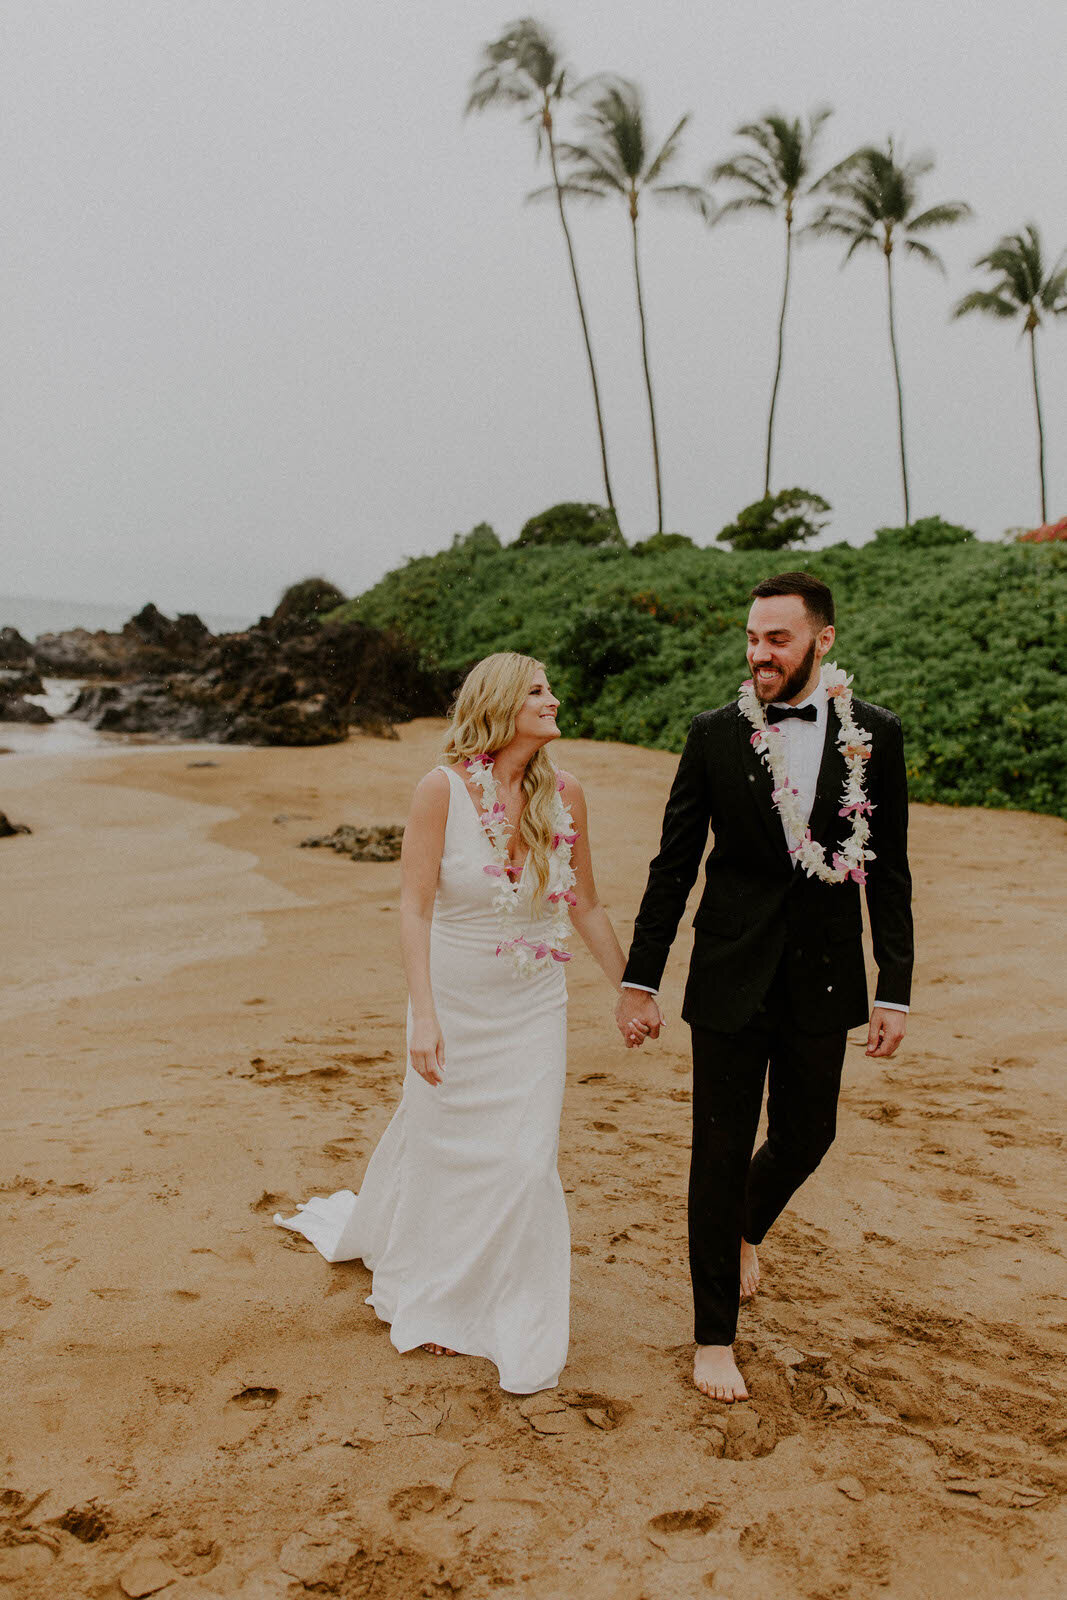 Brianna-Broyles-Photography-Fairmont-Kea-Lani-Wedding-Maui-Photographer-51.jpg